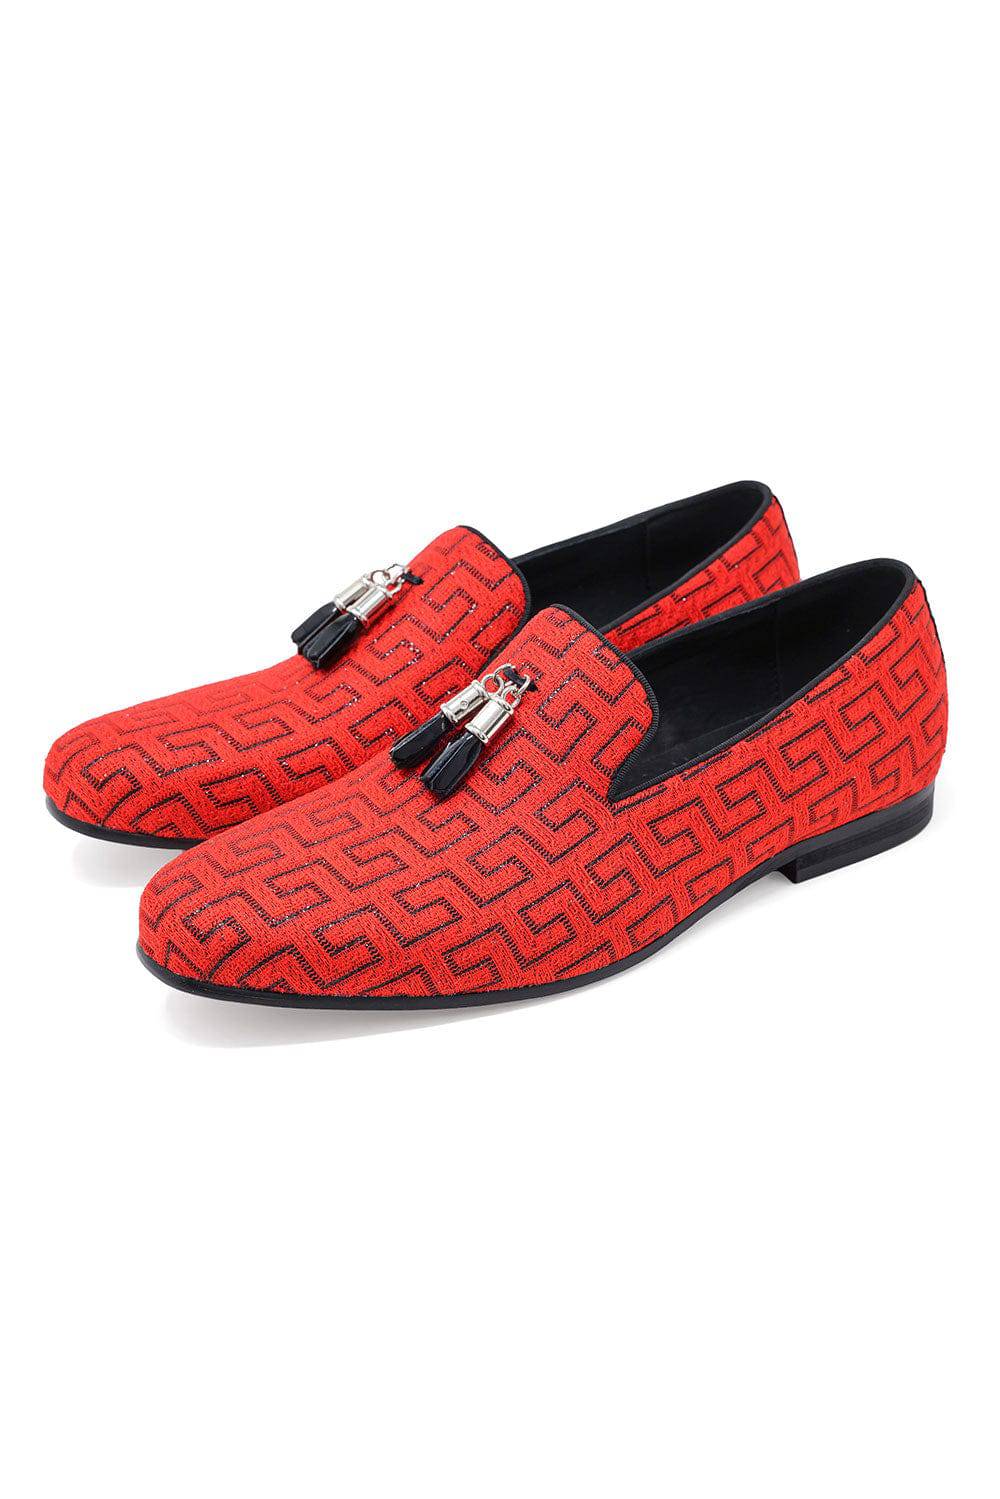 BARABAS Men's Rhinestone Greek key Pattern Tassel Loafer Shoes SH3087 Red Black